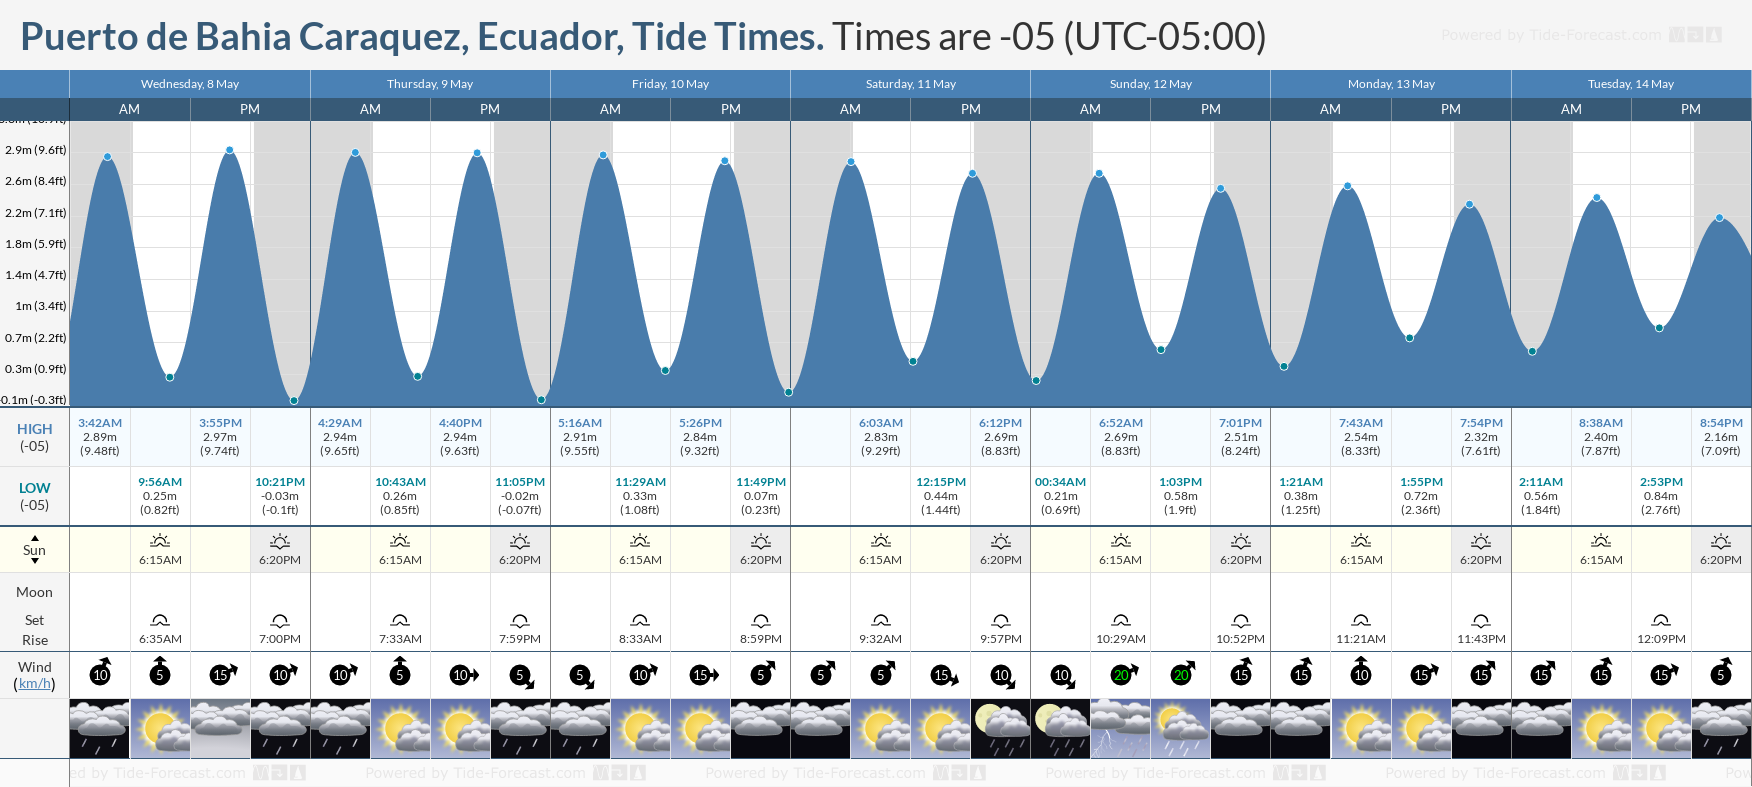 Puerto de Bahia Caraquez, Ecuador Tide Chart including high and low tide tide times for the next 7 days